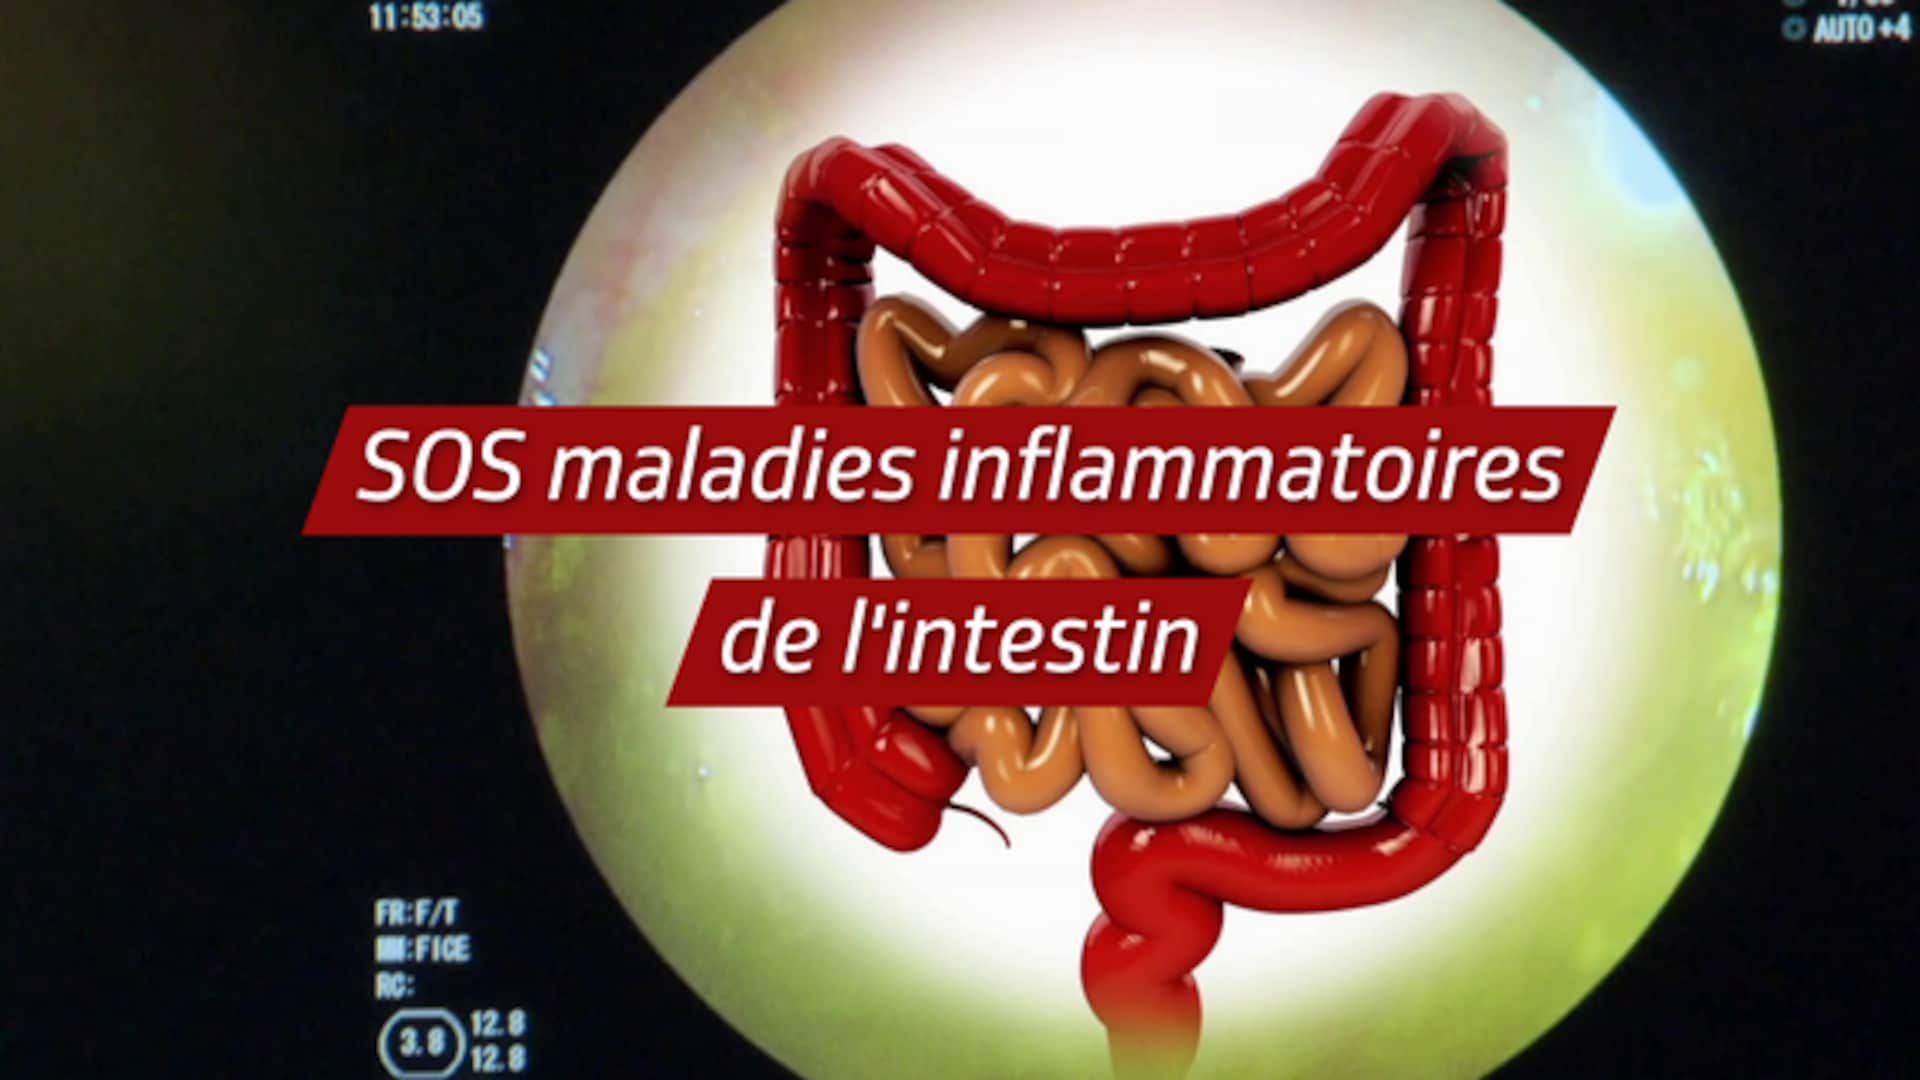 SOS maladies inflammatoires de l'intestin